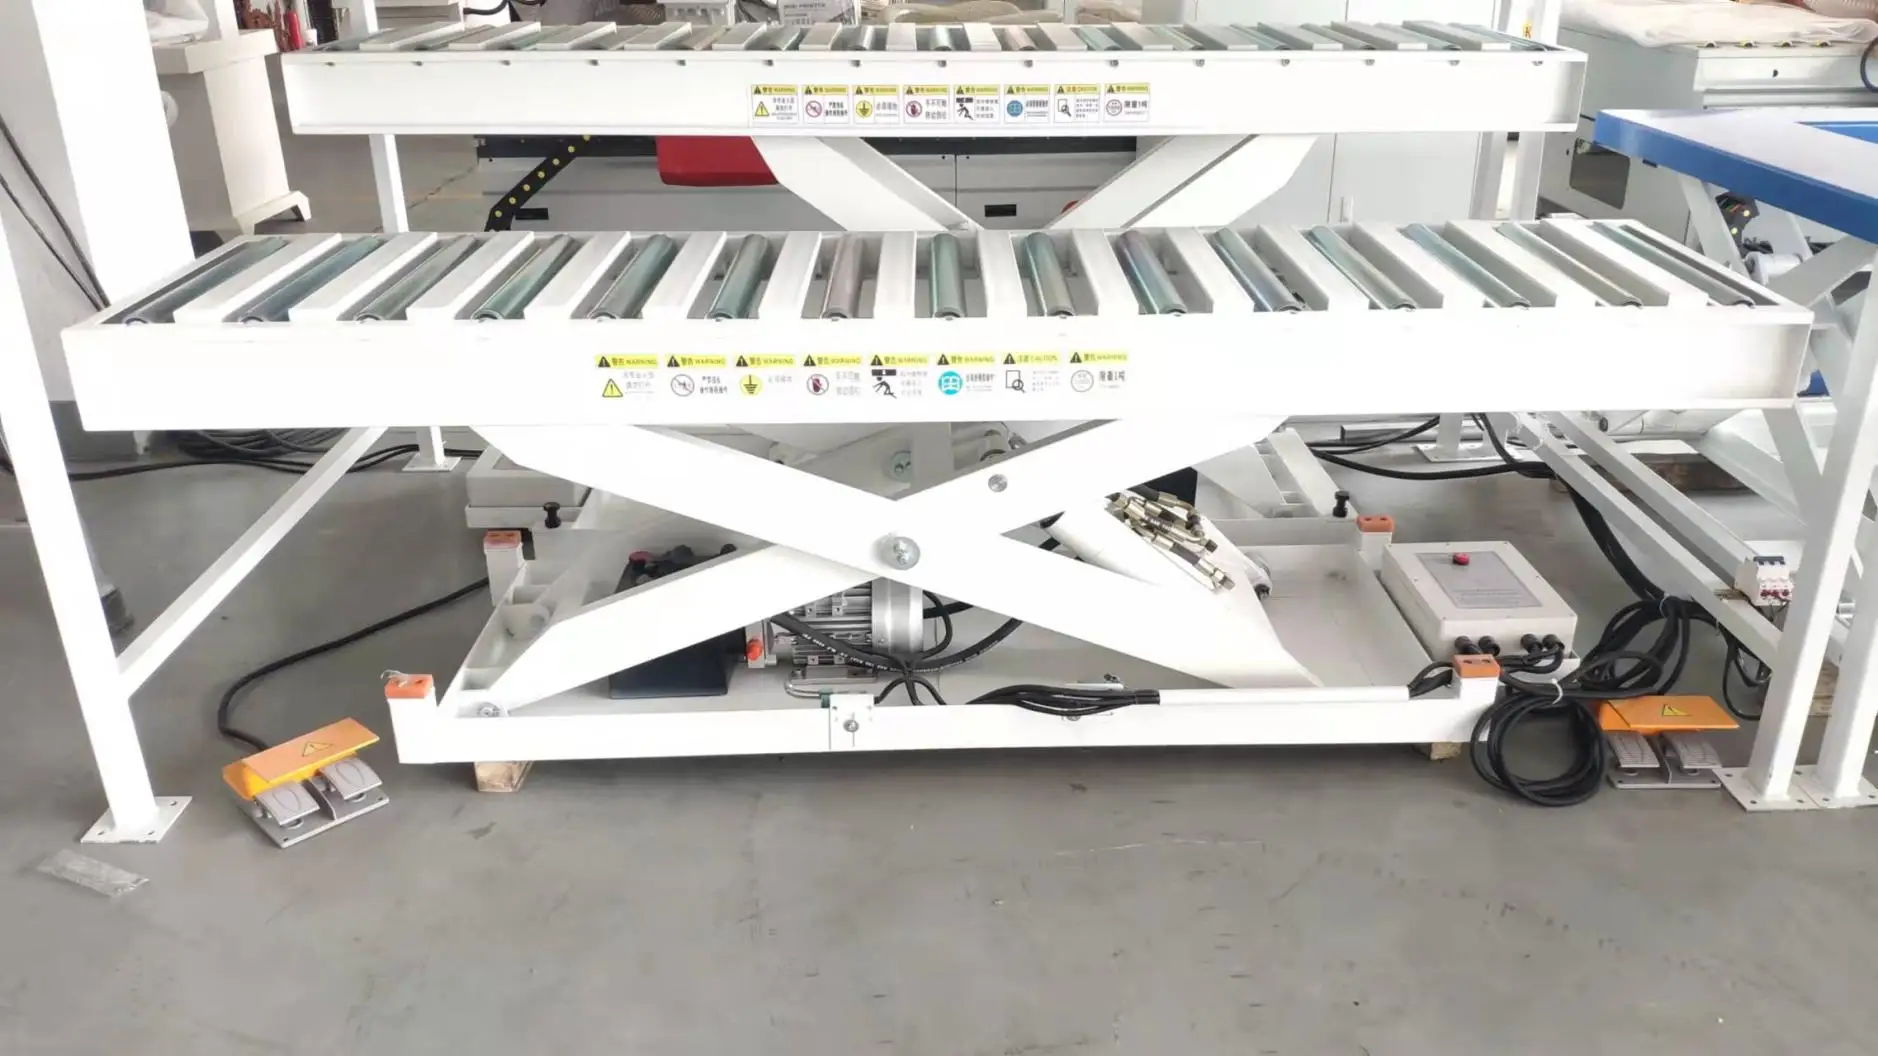 Hongrui Wood Edge Banding Machine Motorized Conveyor Roller manufacture